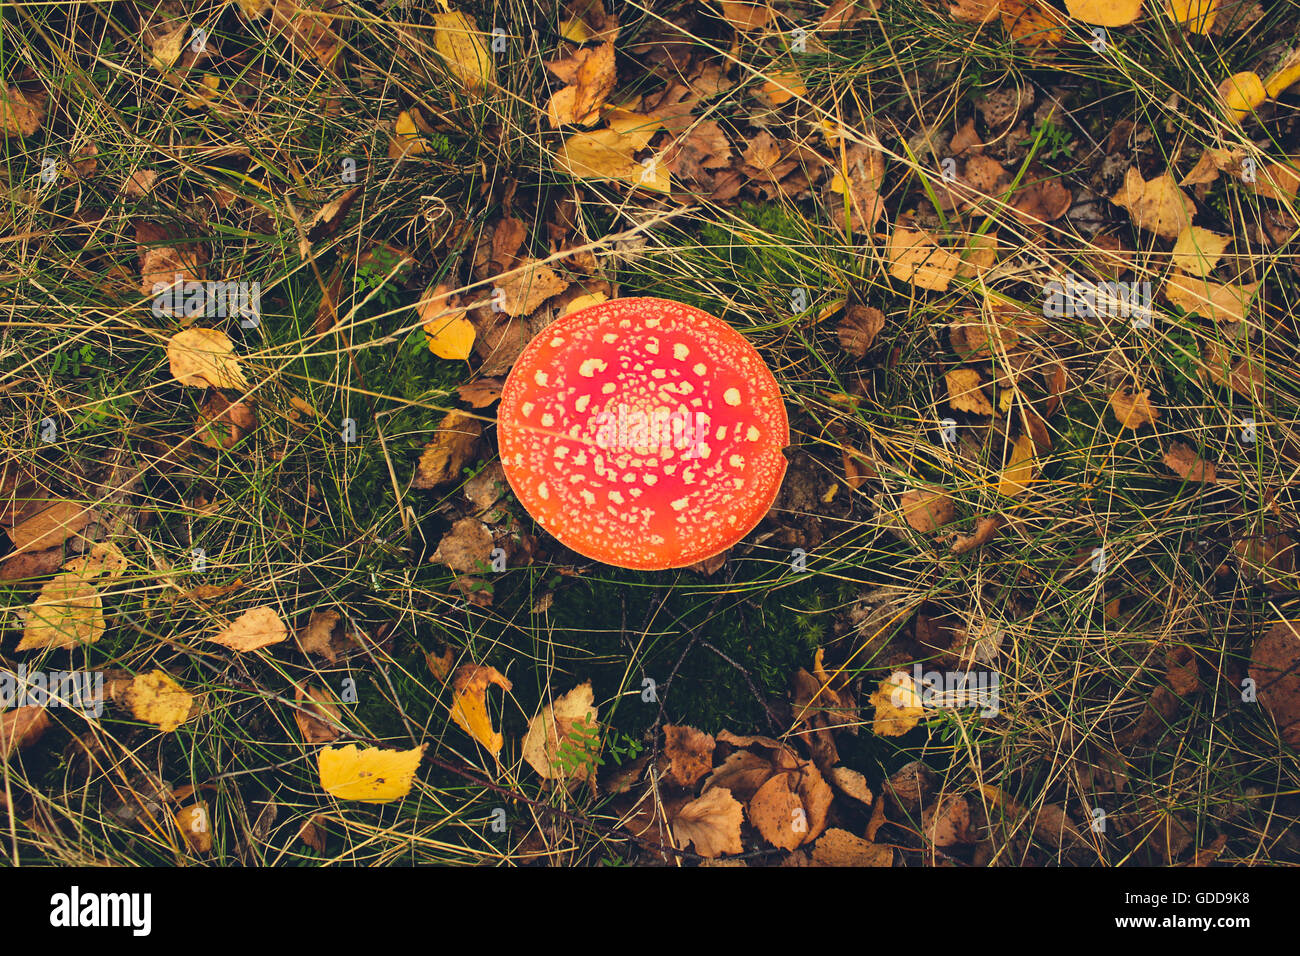 Fliegenpilz, fly Agaric, Pilze im Wald - Herbst Wald landschaft Stockfoto